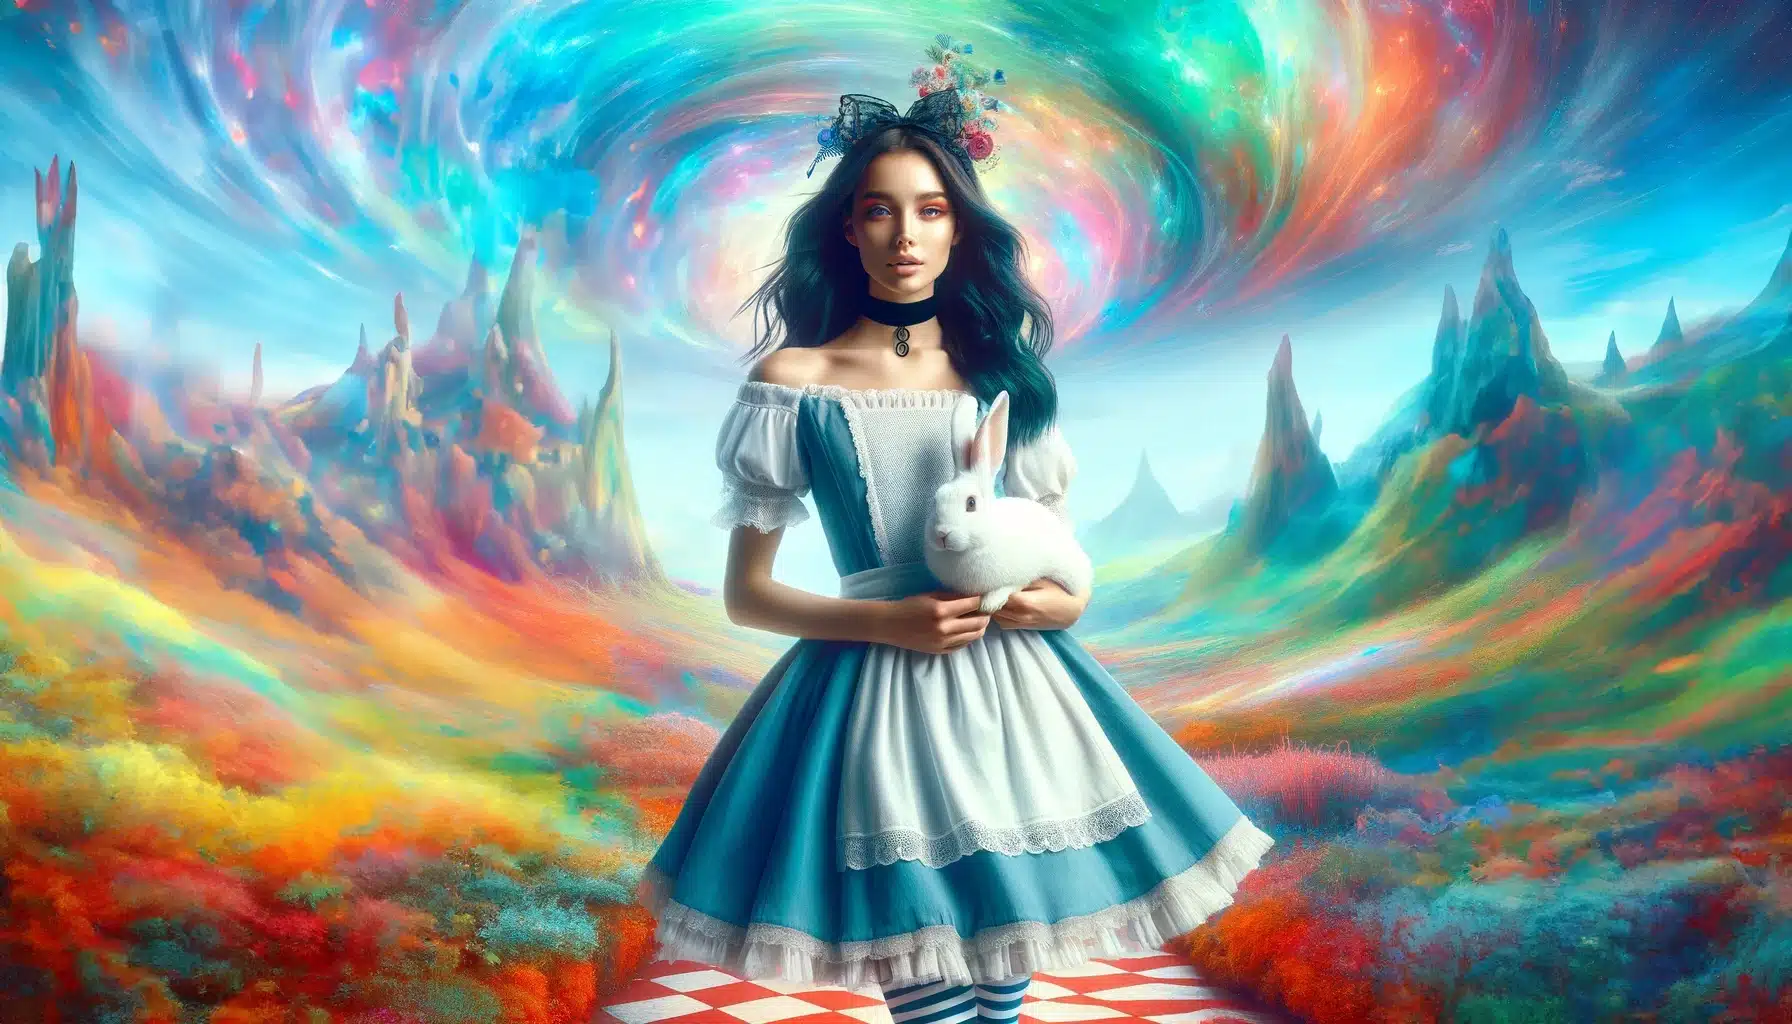 Modern interpretation of Alice in Wonderland in a vibrant, surreal landscape, symbolizing curiosity and adventure in dream exploration.